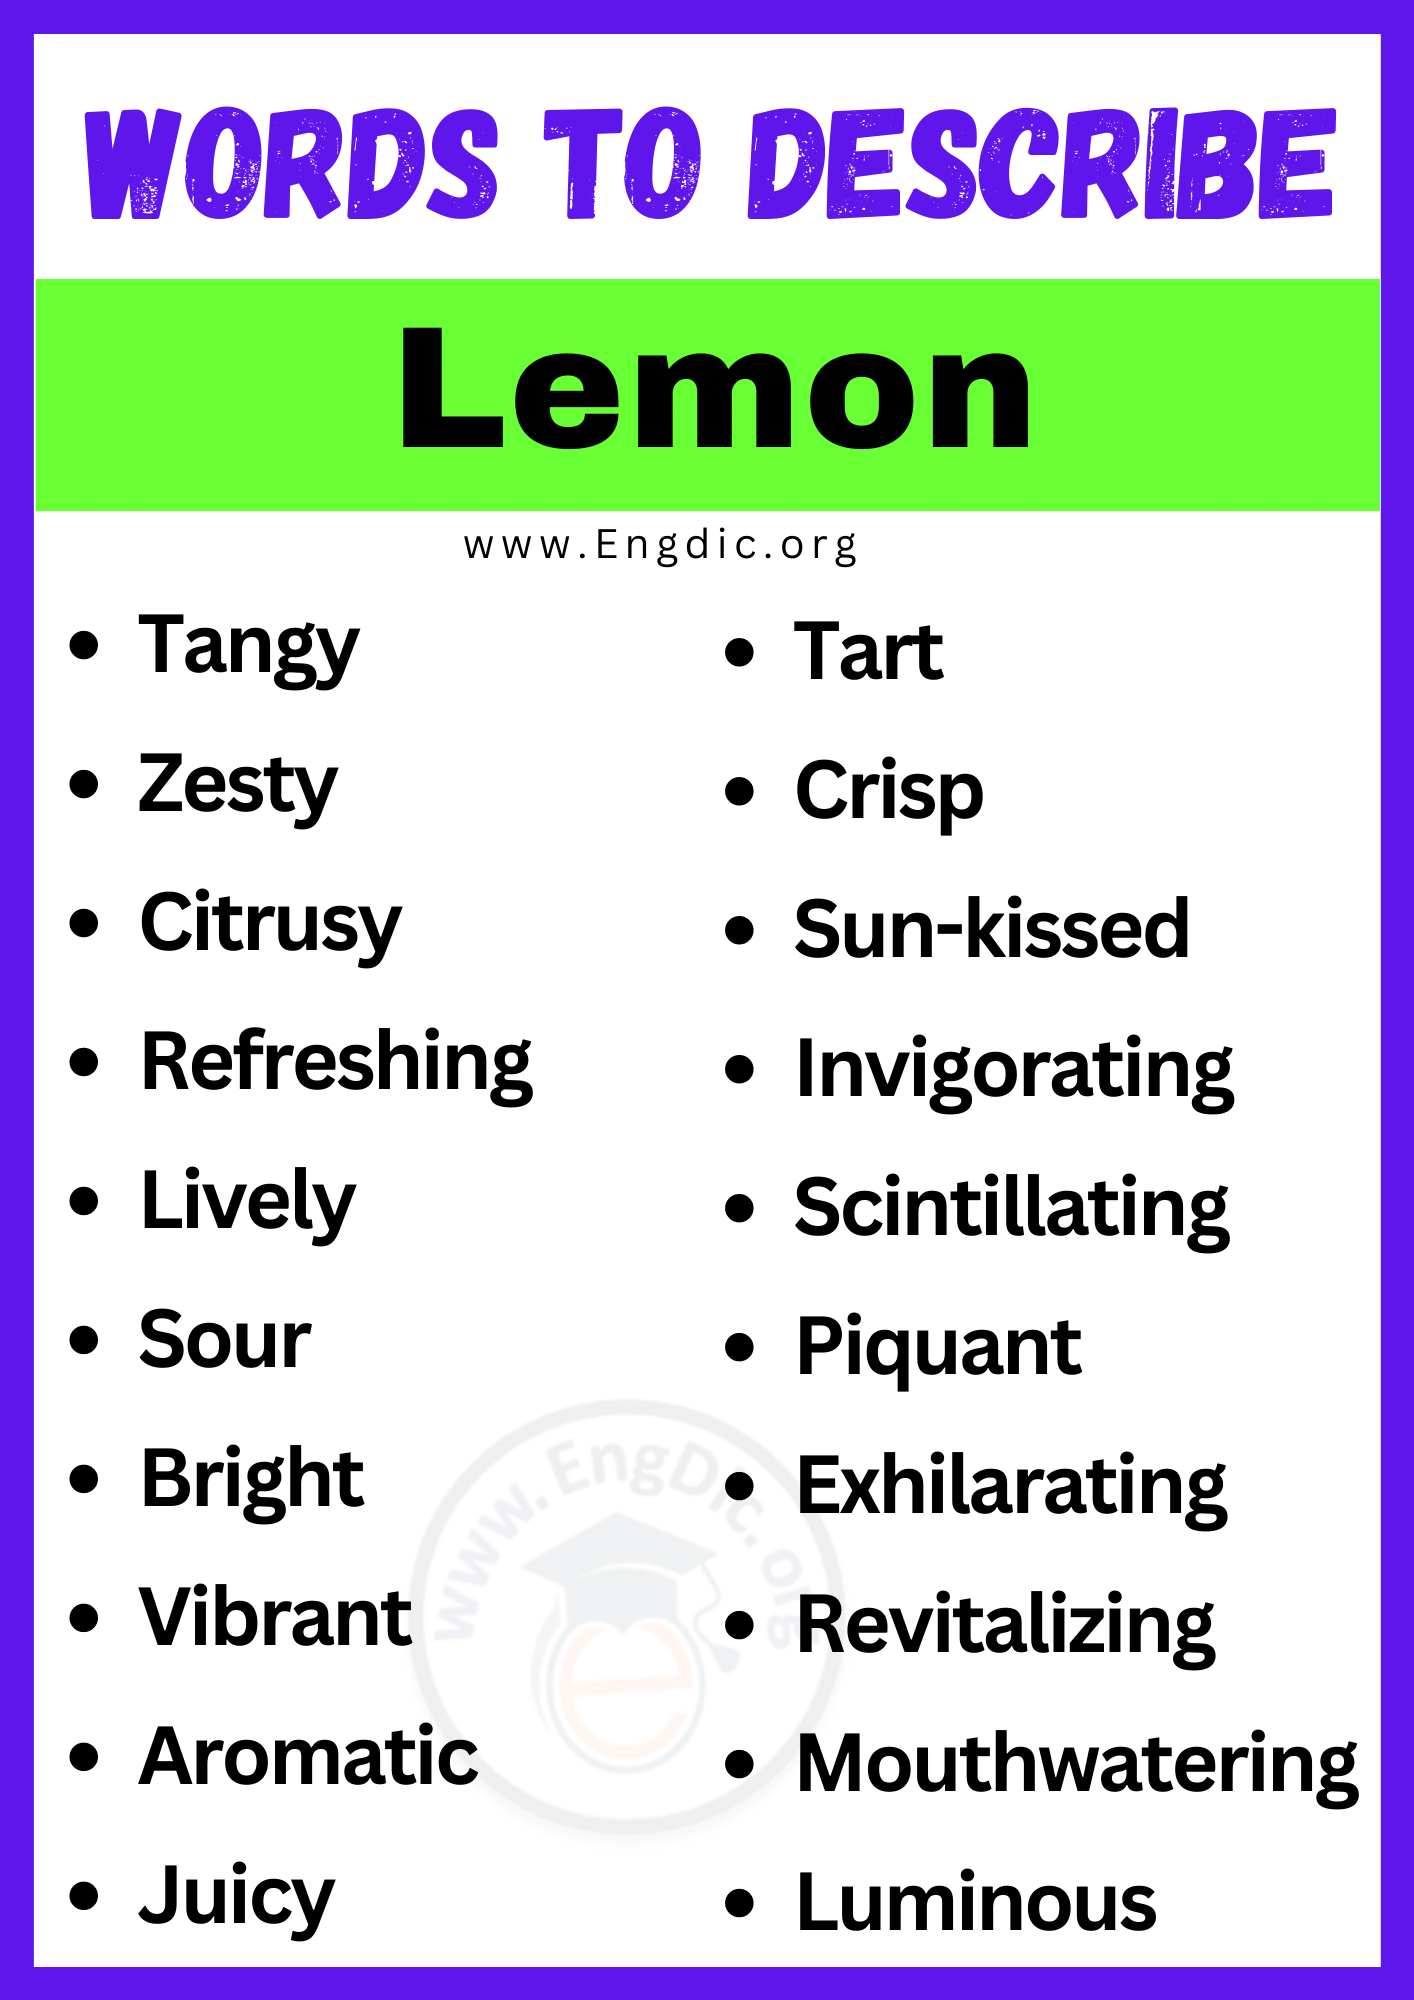 Words to Describe Lemon